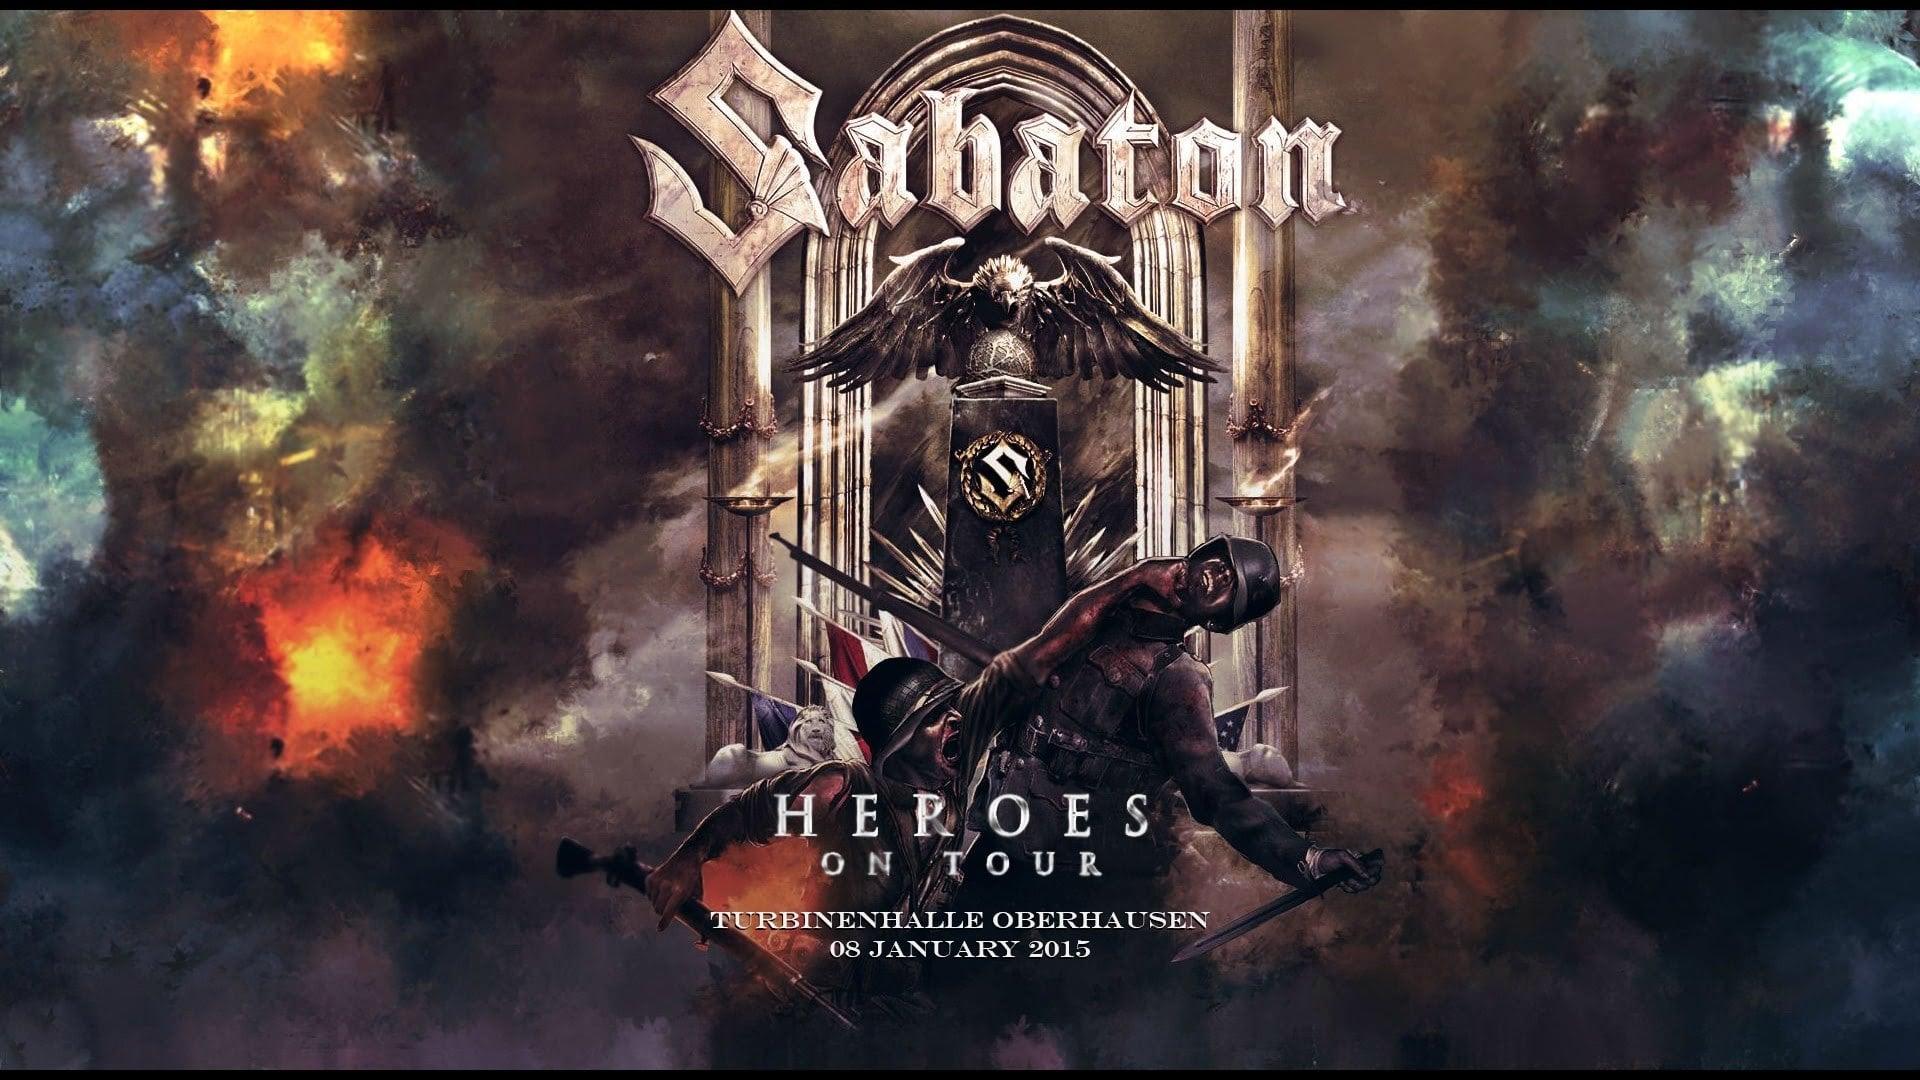 Sabaton - Heroes on tour backdrop